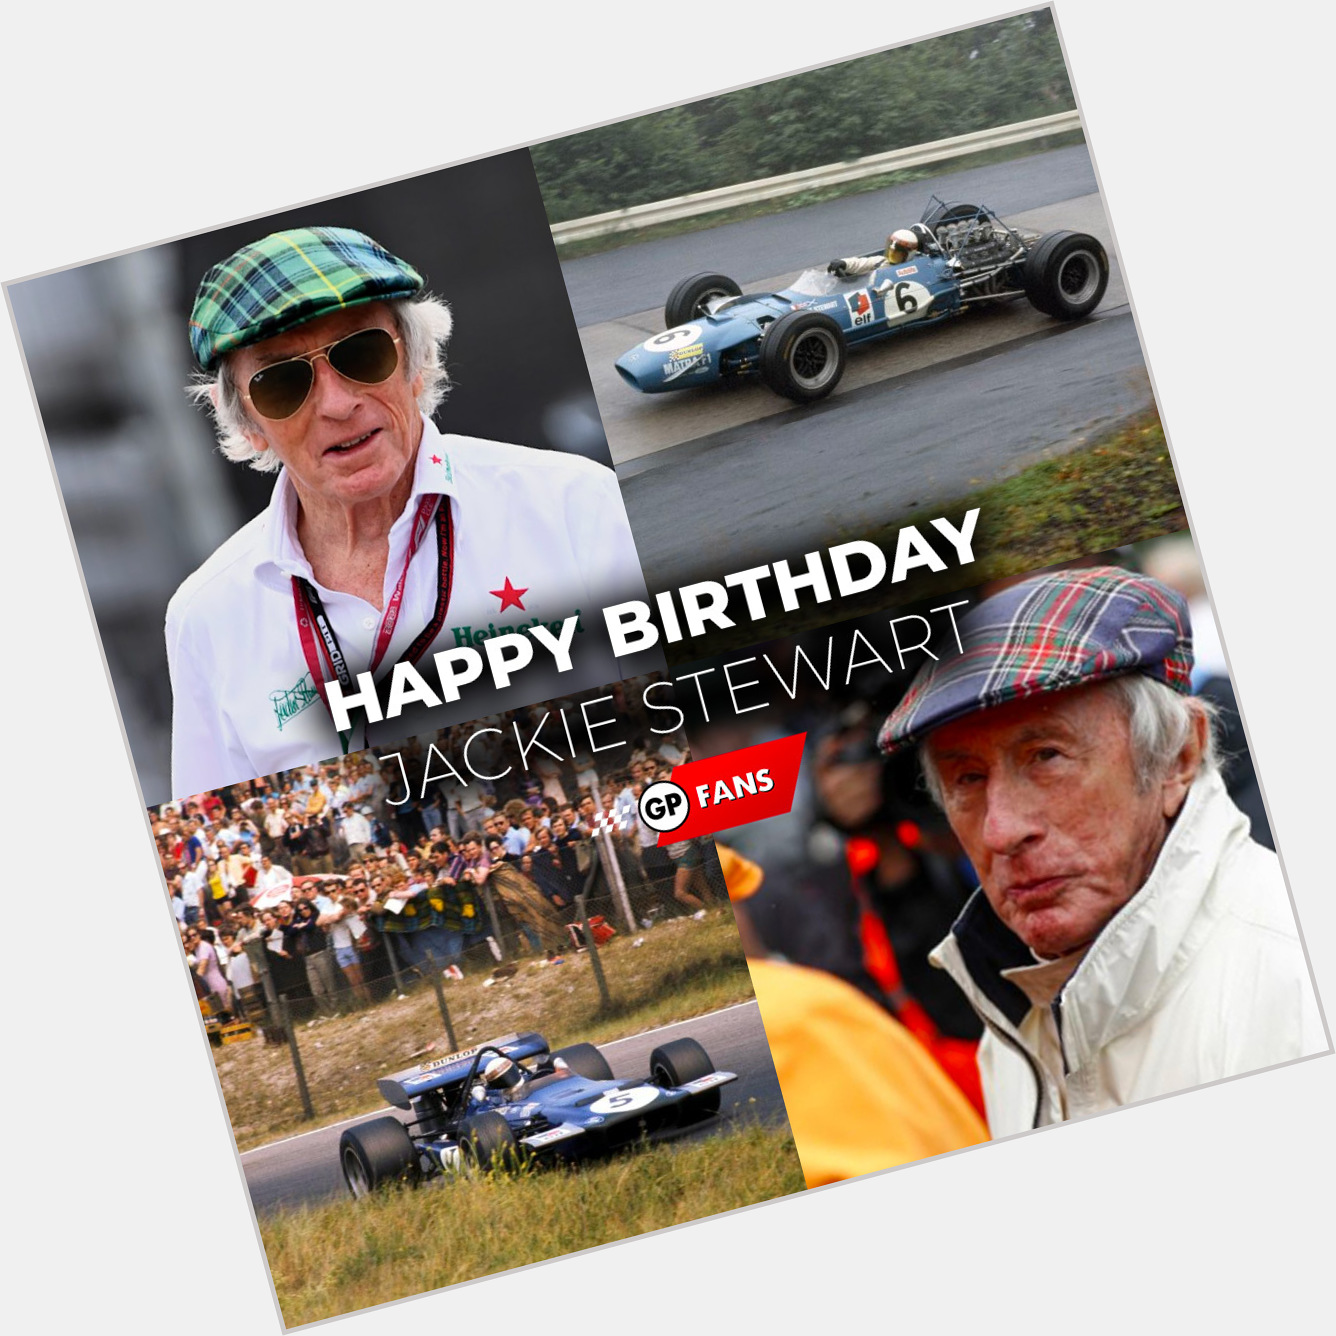 Happy Birthday Jackie Stewart!

The legend is 84 today 